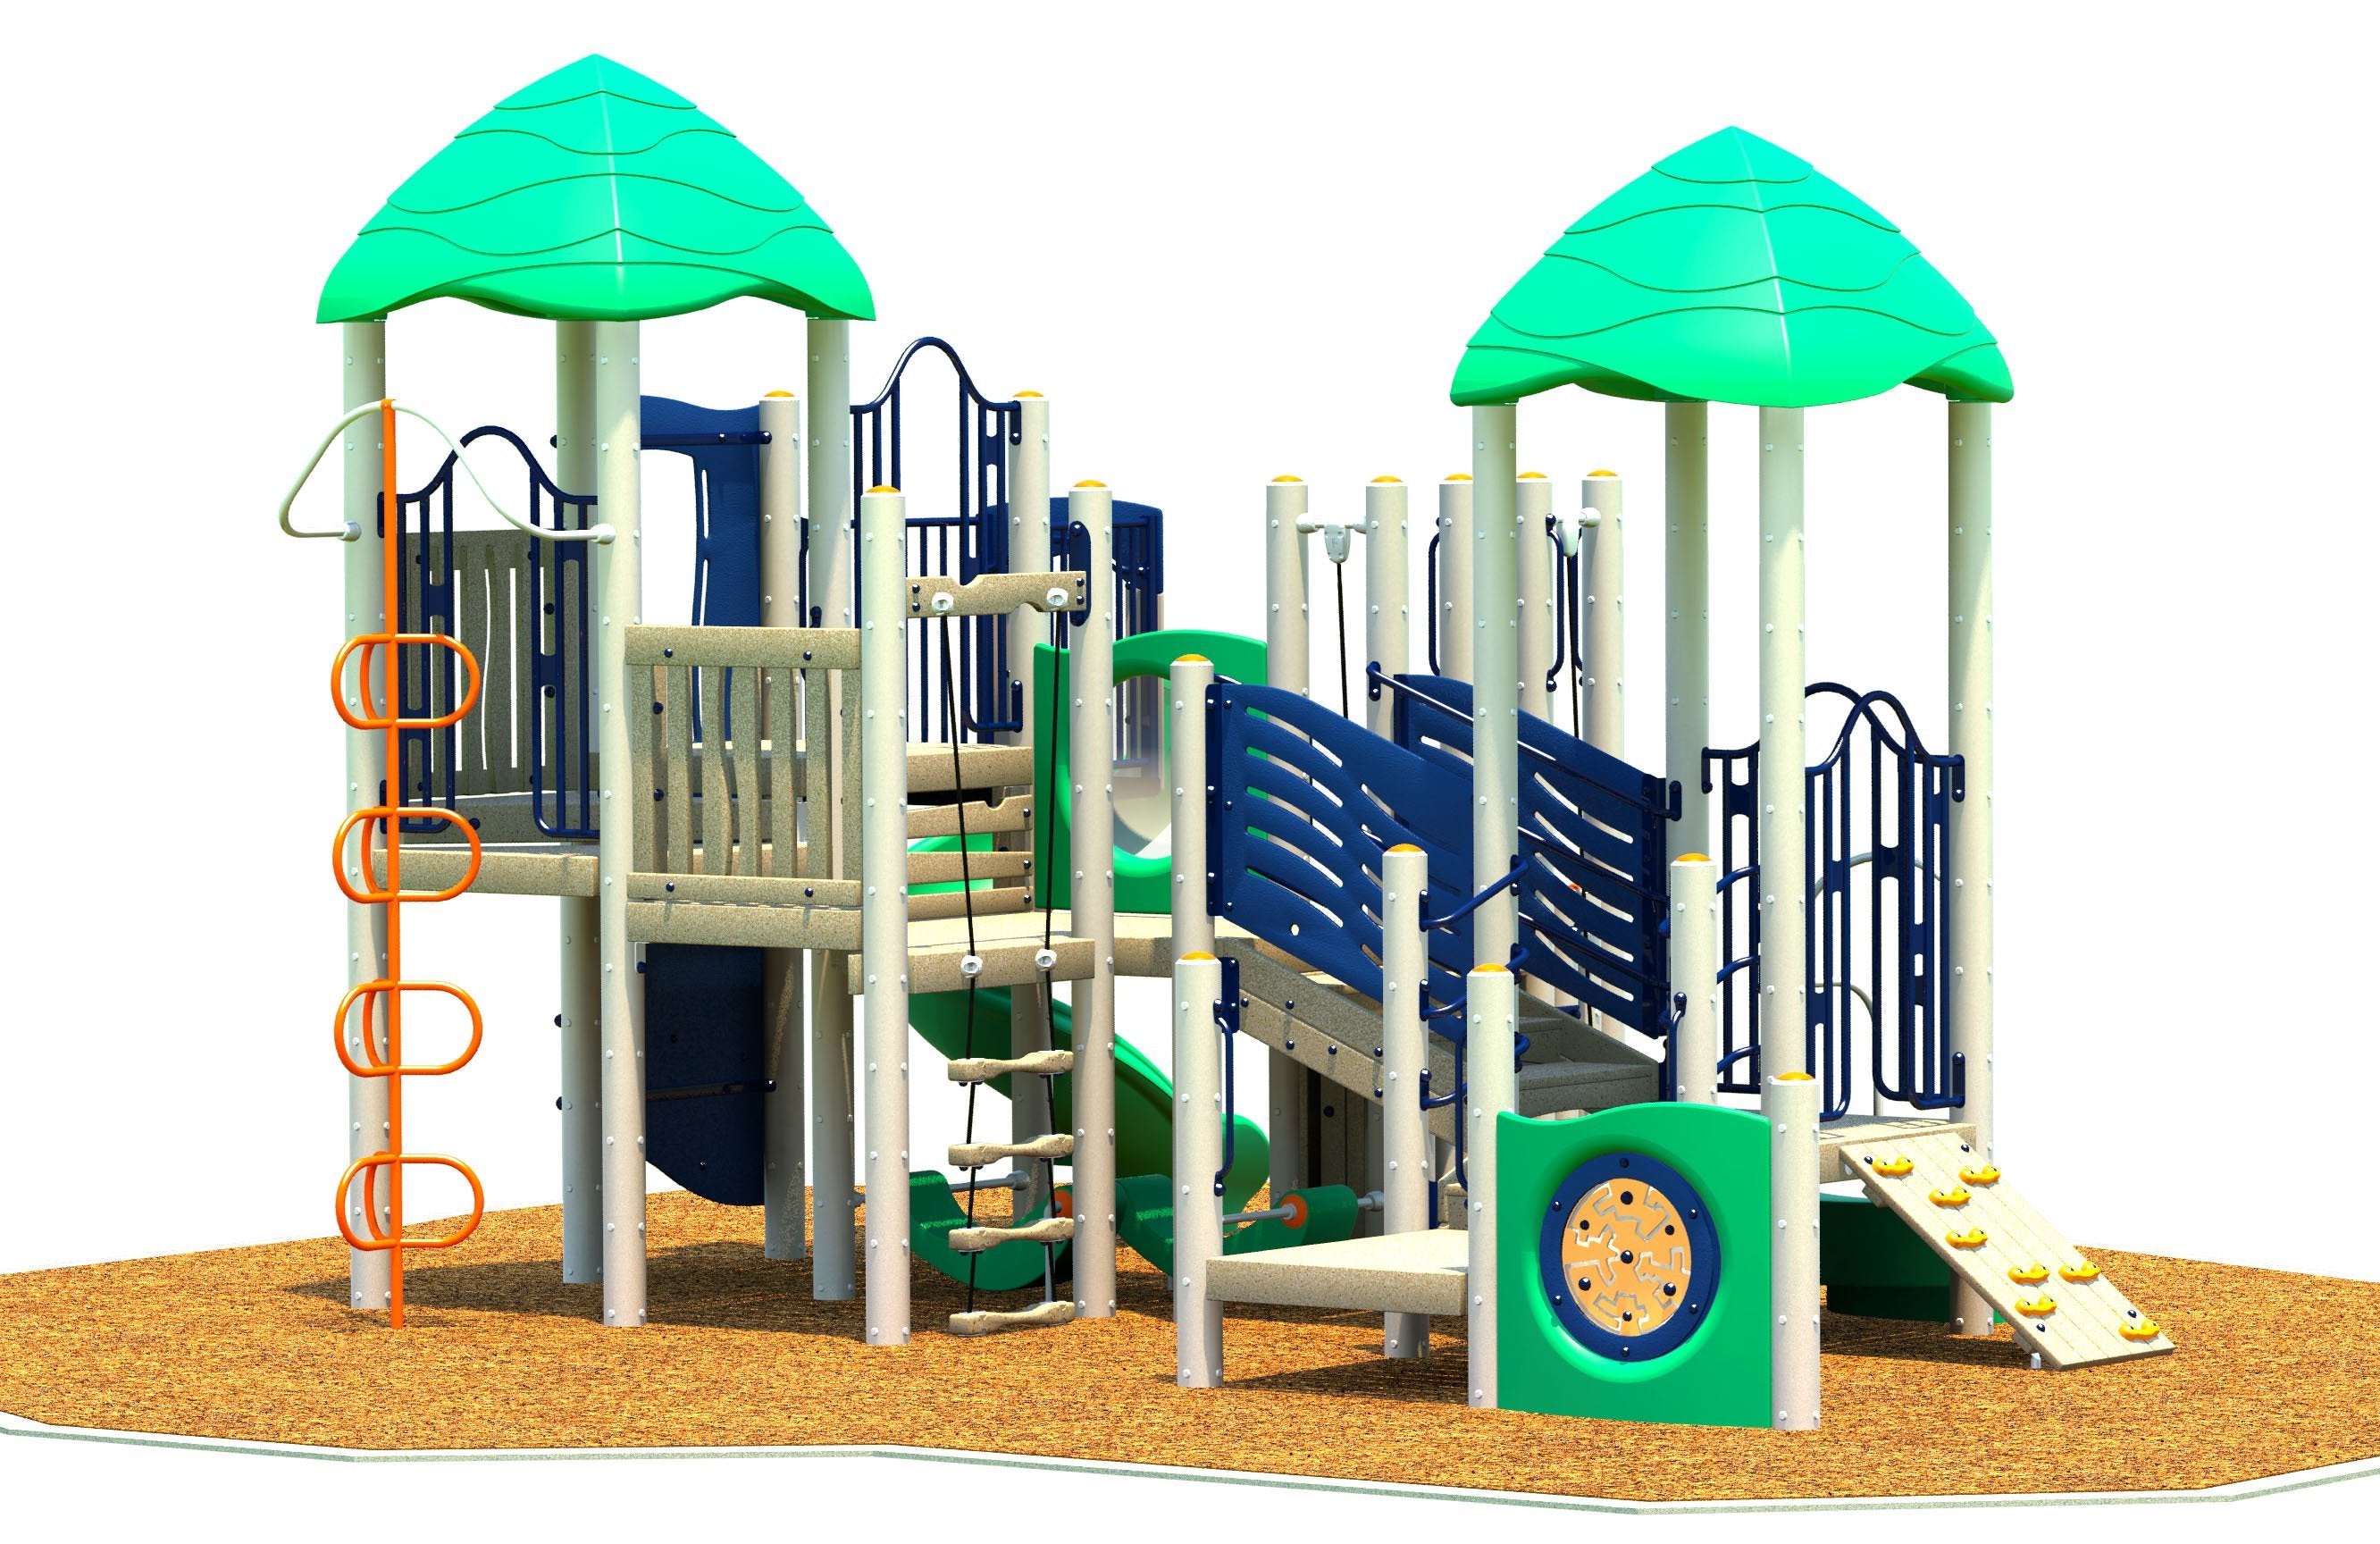 Overpass Play System Playground | WillyGoat Playground Equipment